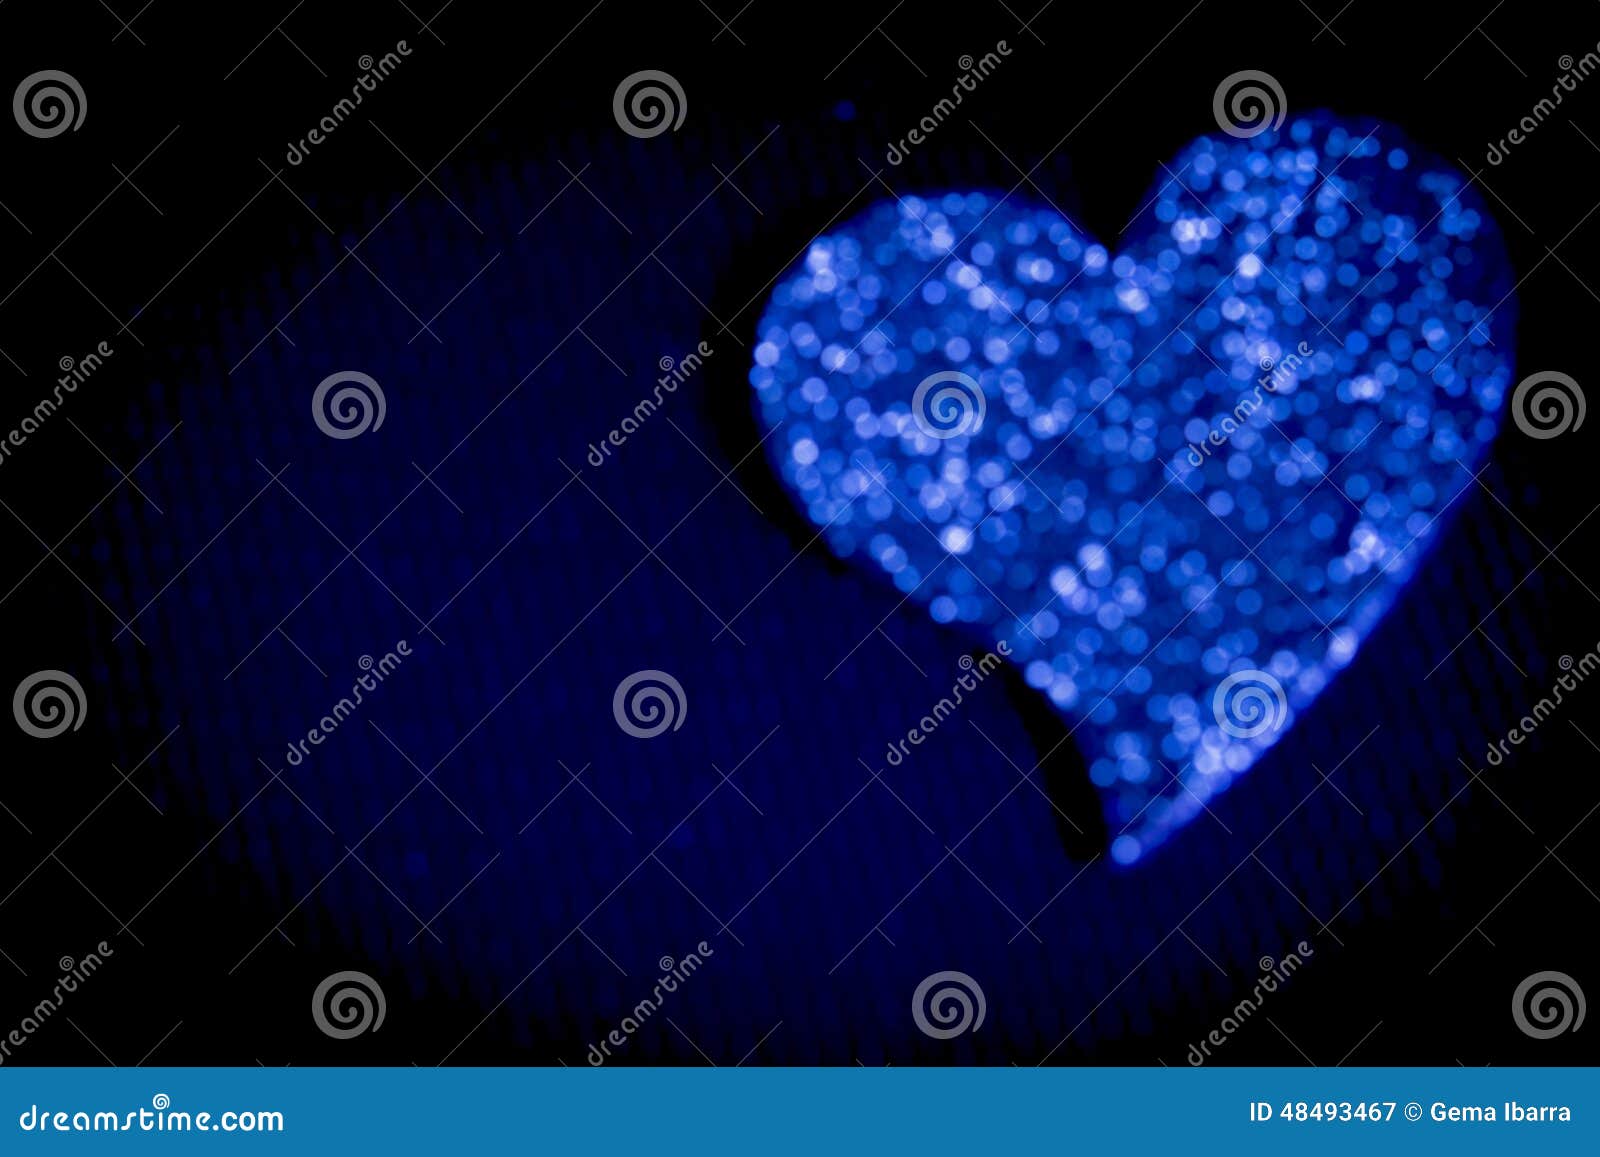 Blue Heart Stock Image. Image Of Shiny, Blue, Black, Copy - 48493467